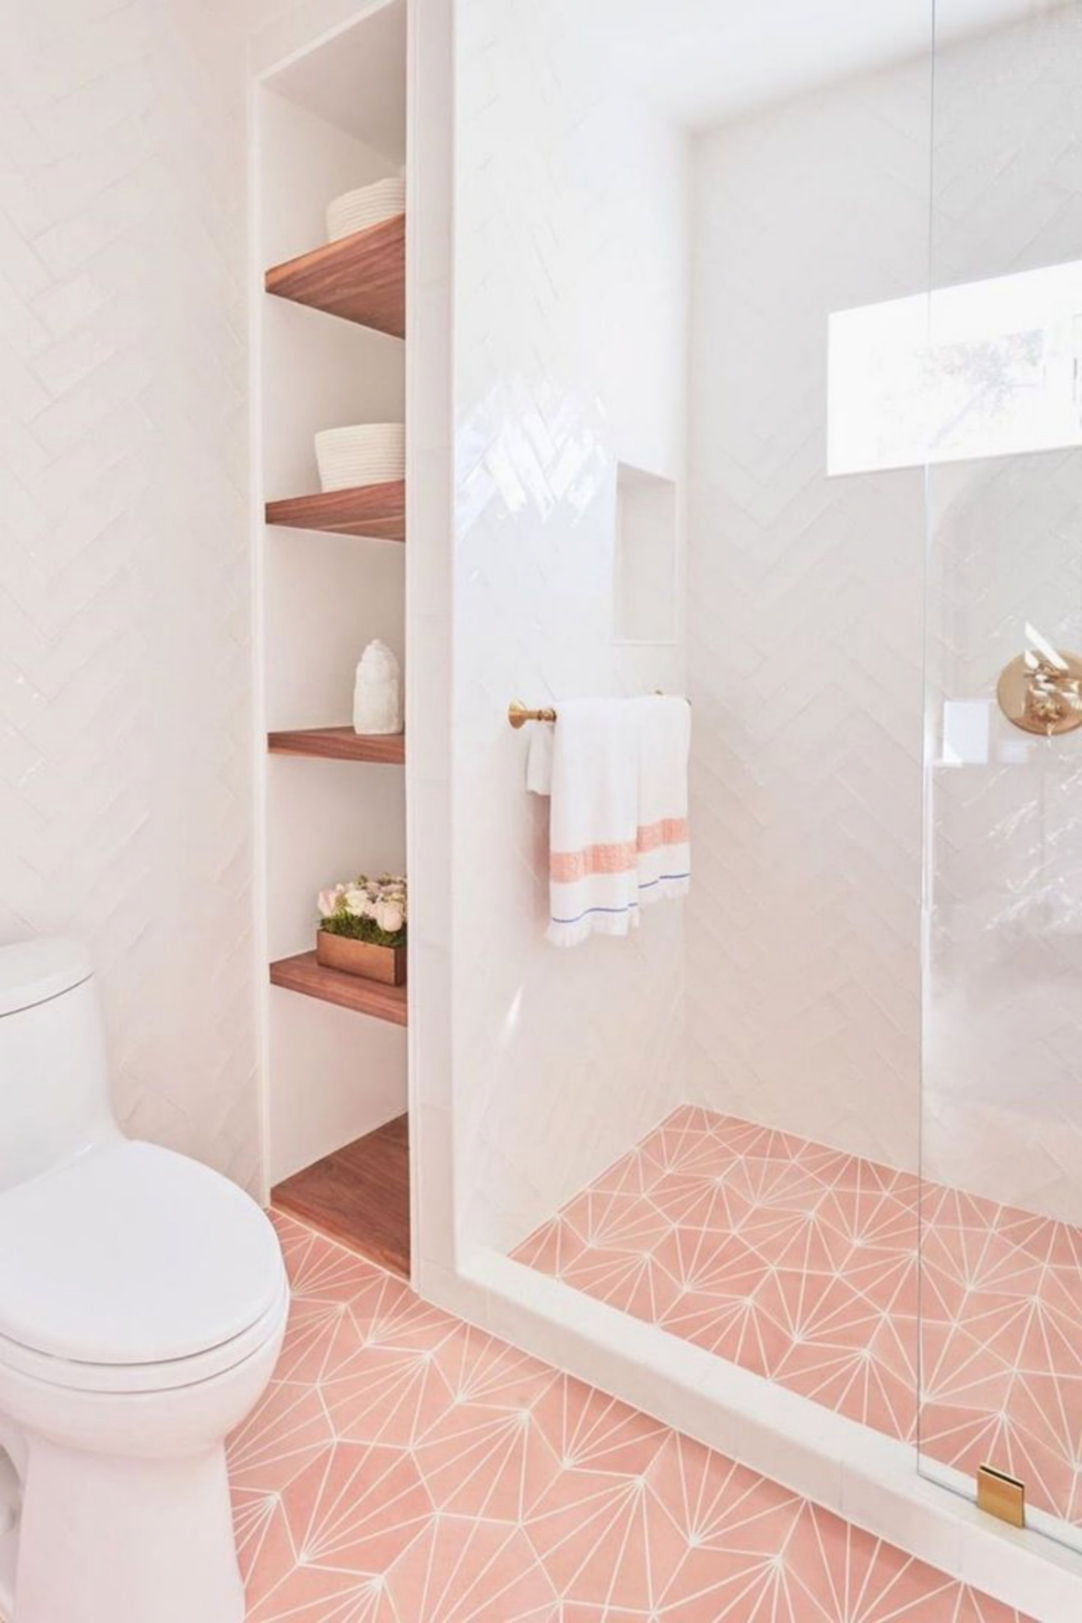 Exceptional bathroom tile ideas for bathroom ceramic tile 7